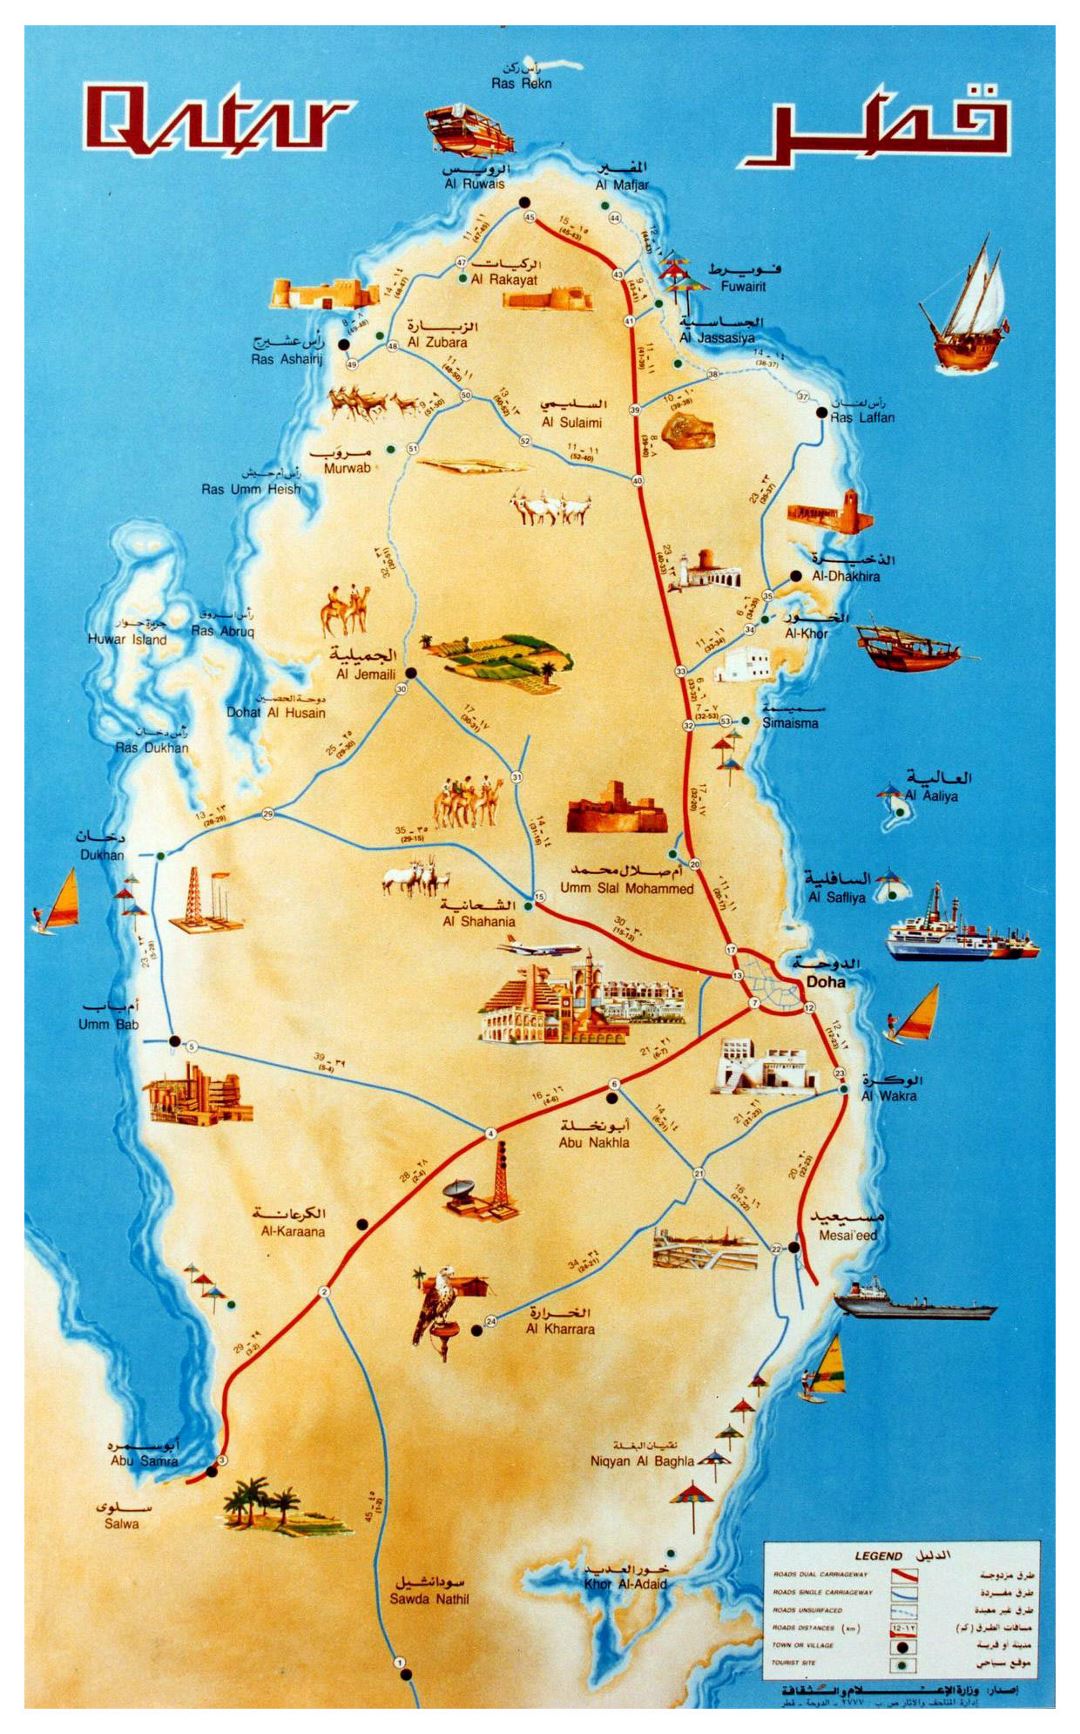 Large tourist illustrated map of Qatar